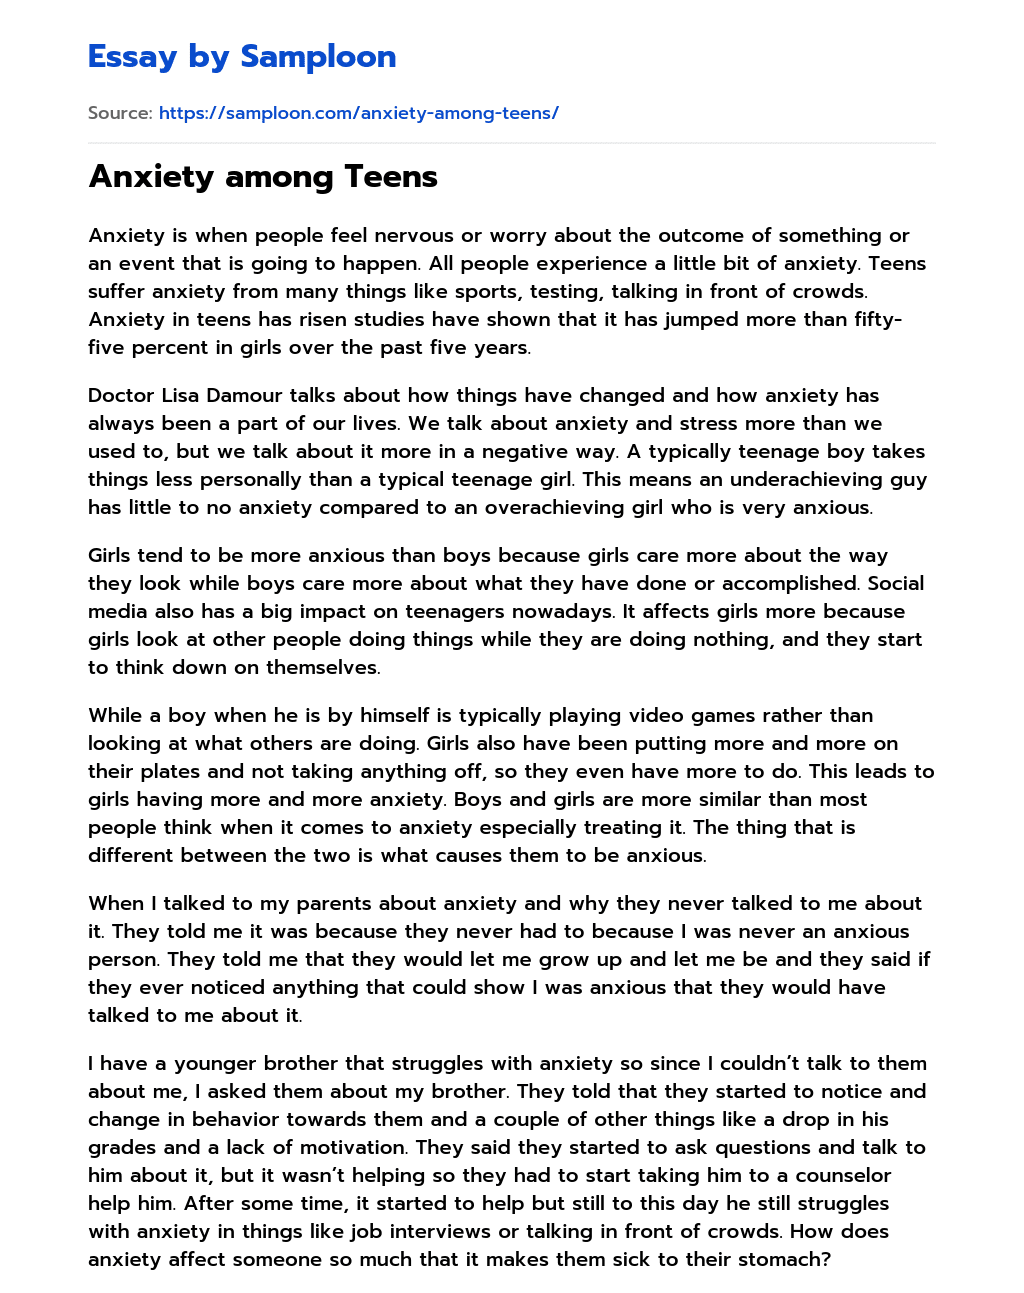 Anxiety among Teens essay